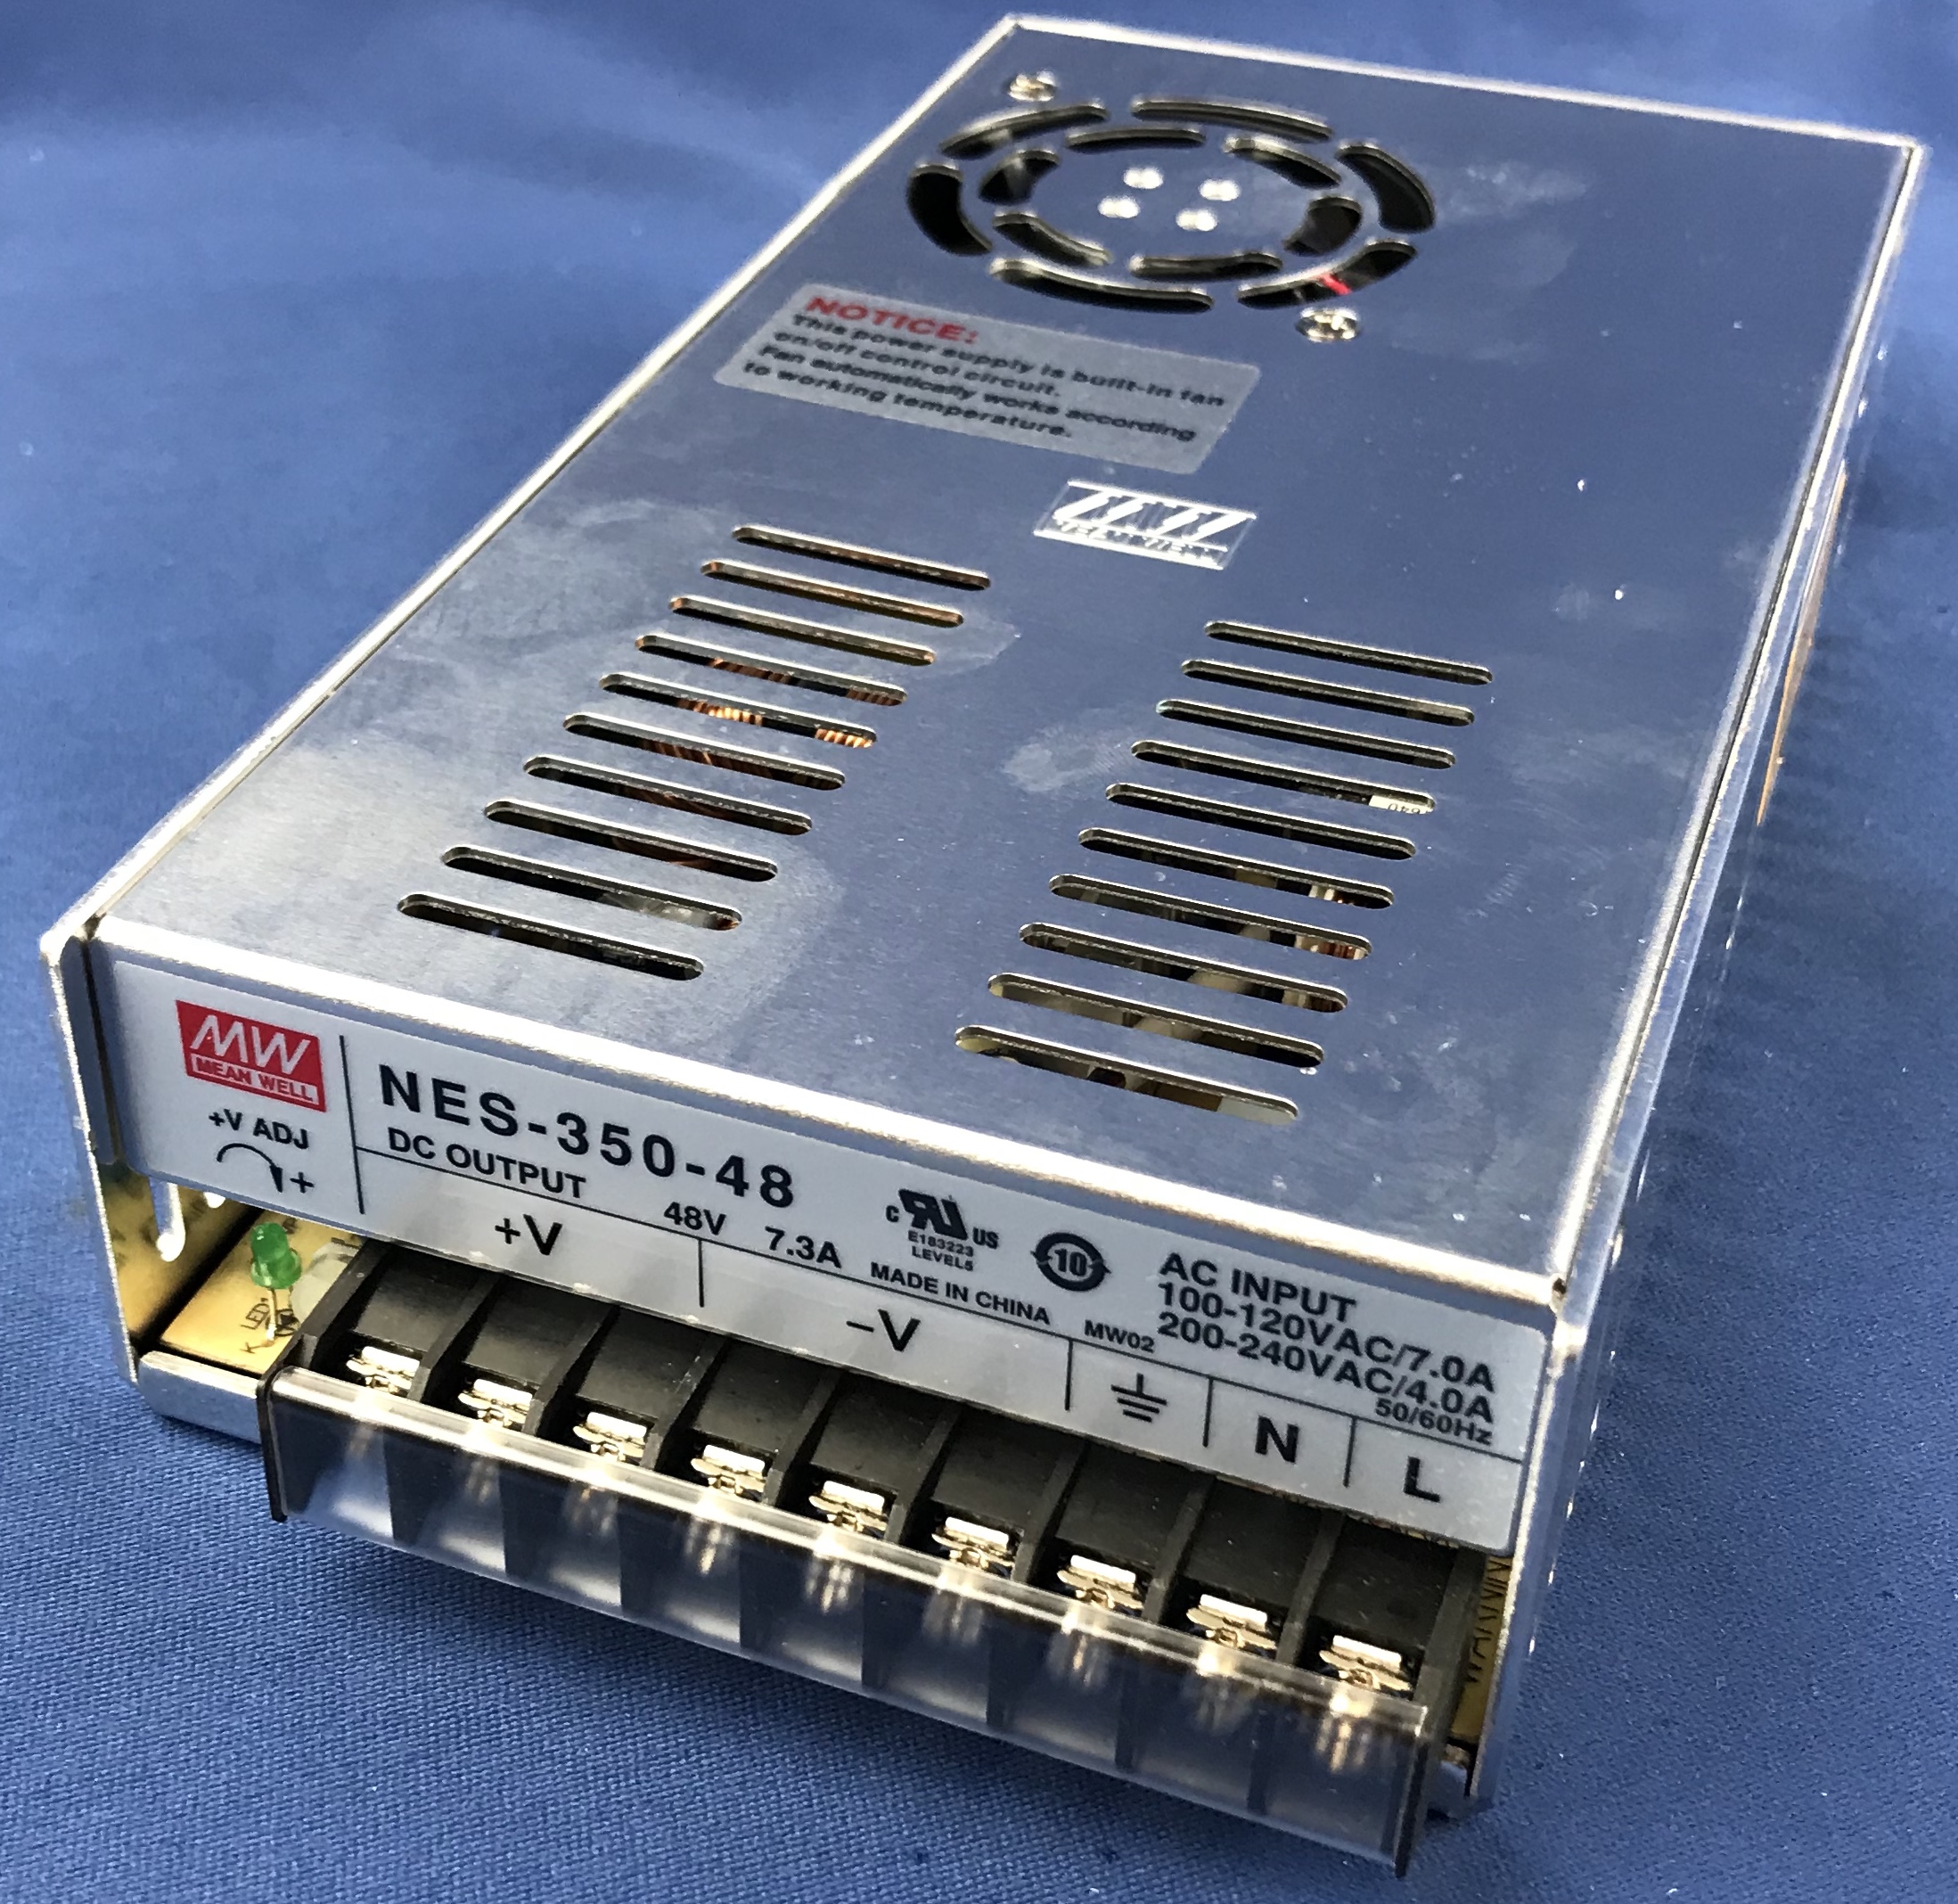 DC 48V 7.3A NES-350-48 Mean Well transformer adaptor